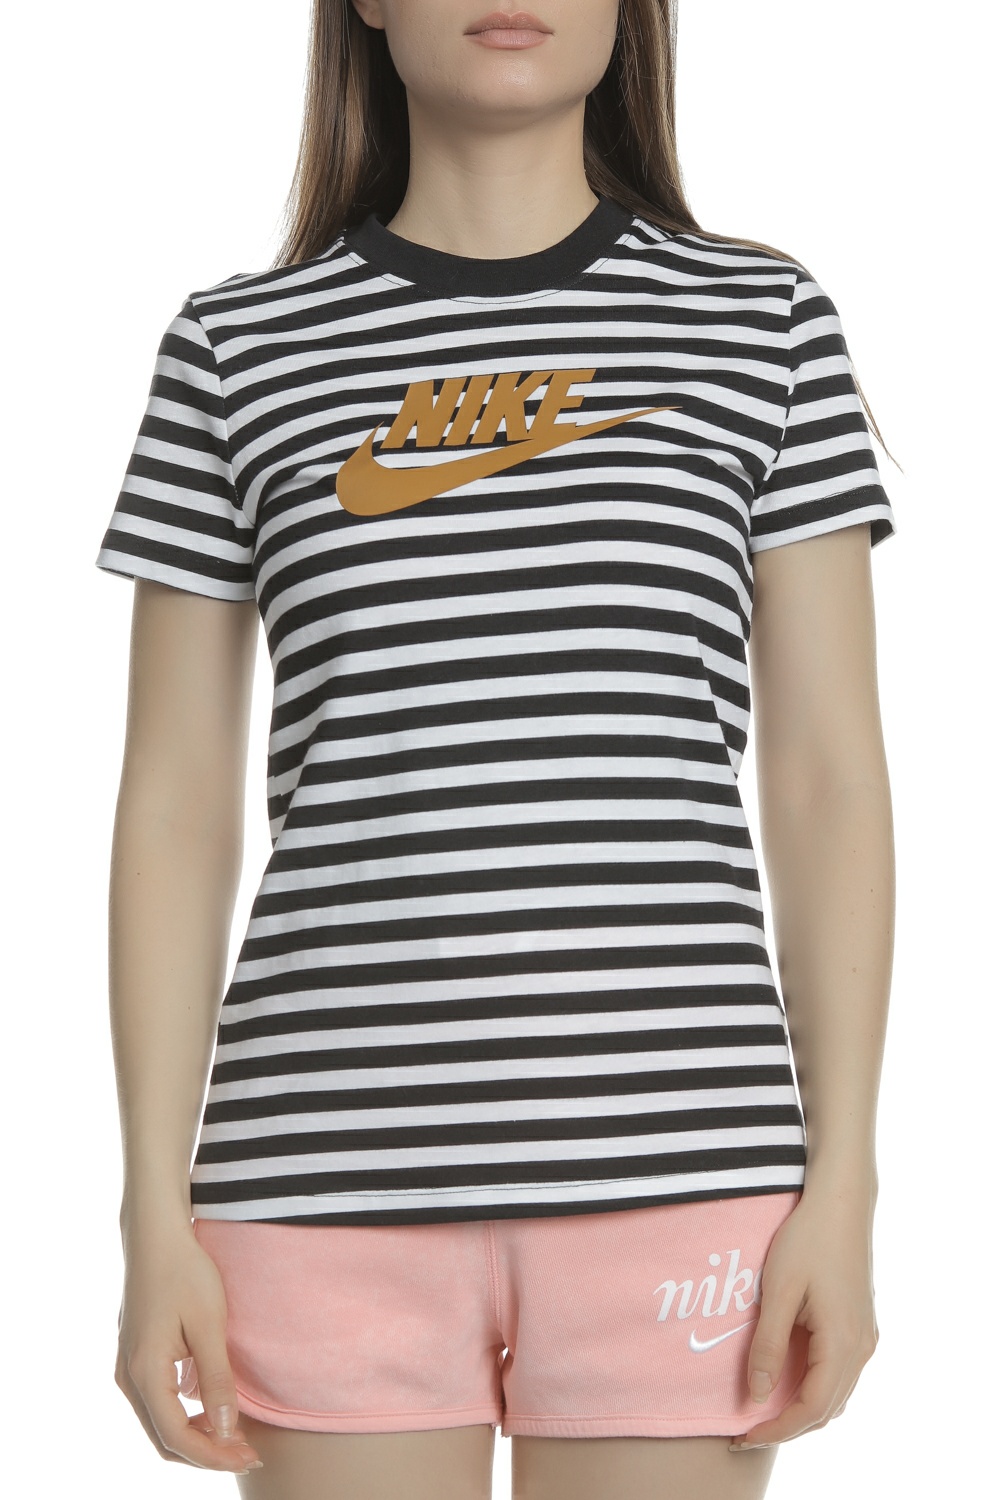 NIKE - Γυναικείο t-shirt NIKE NSW ασπρόμαυρο Γυναικεία/Ρούχα/Αθλητικά/T-shirt-Τοπ